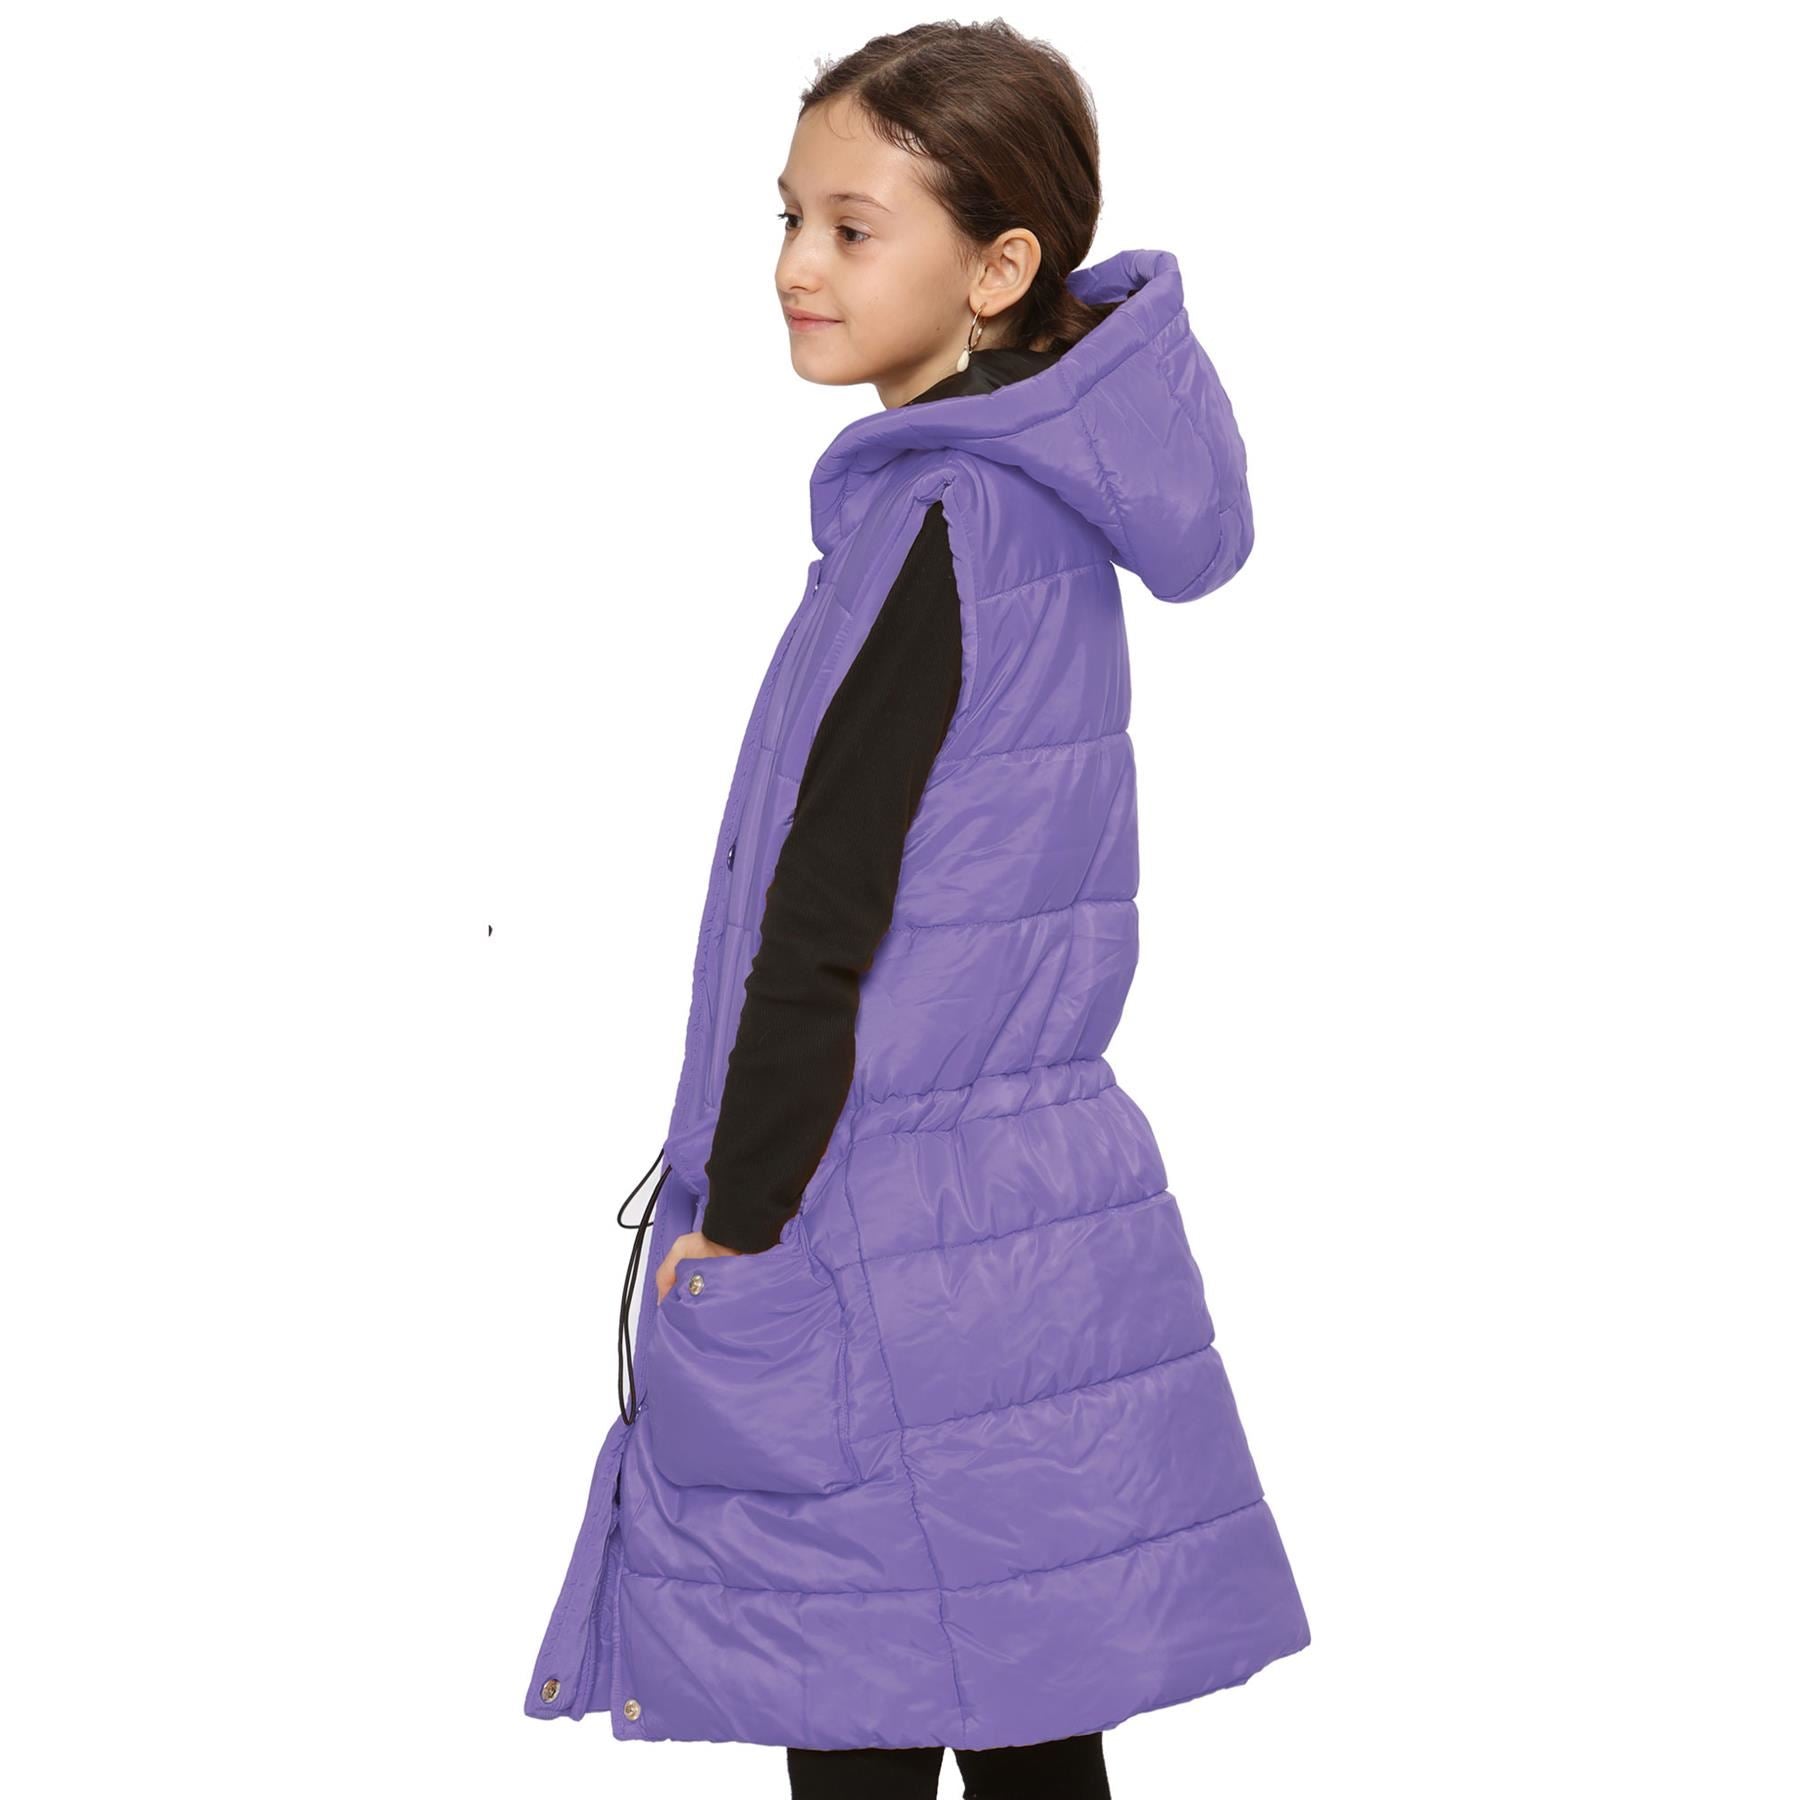 Kids Girls Lilac Gilet Long Line Style Jacket